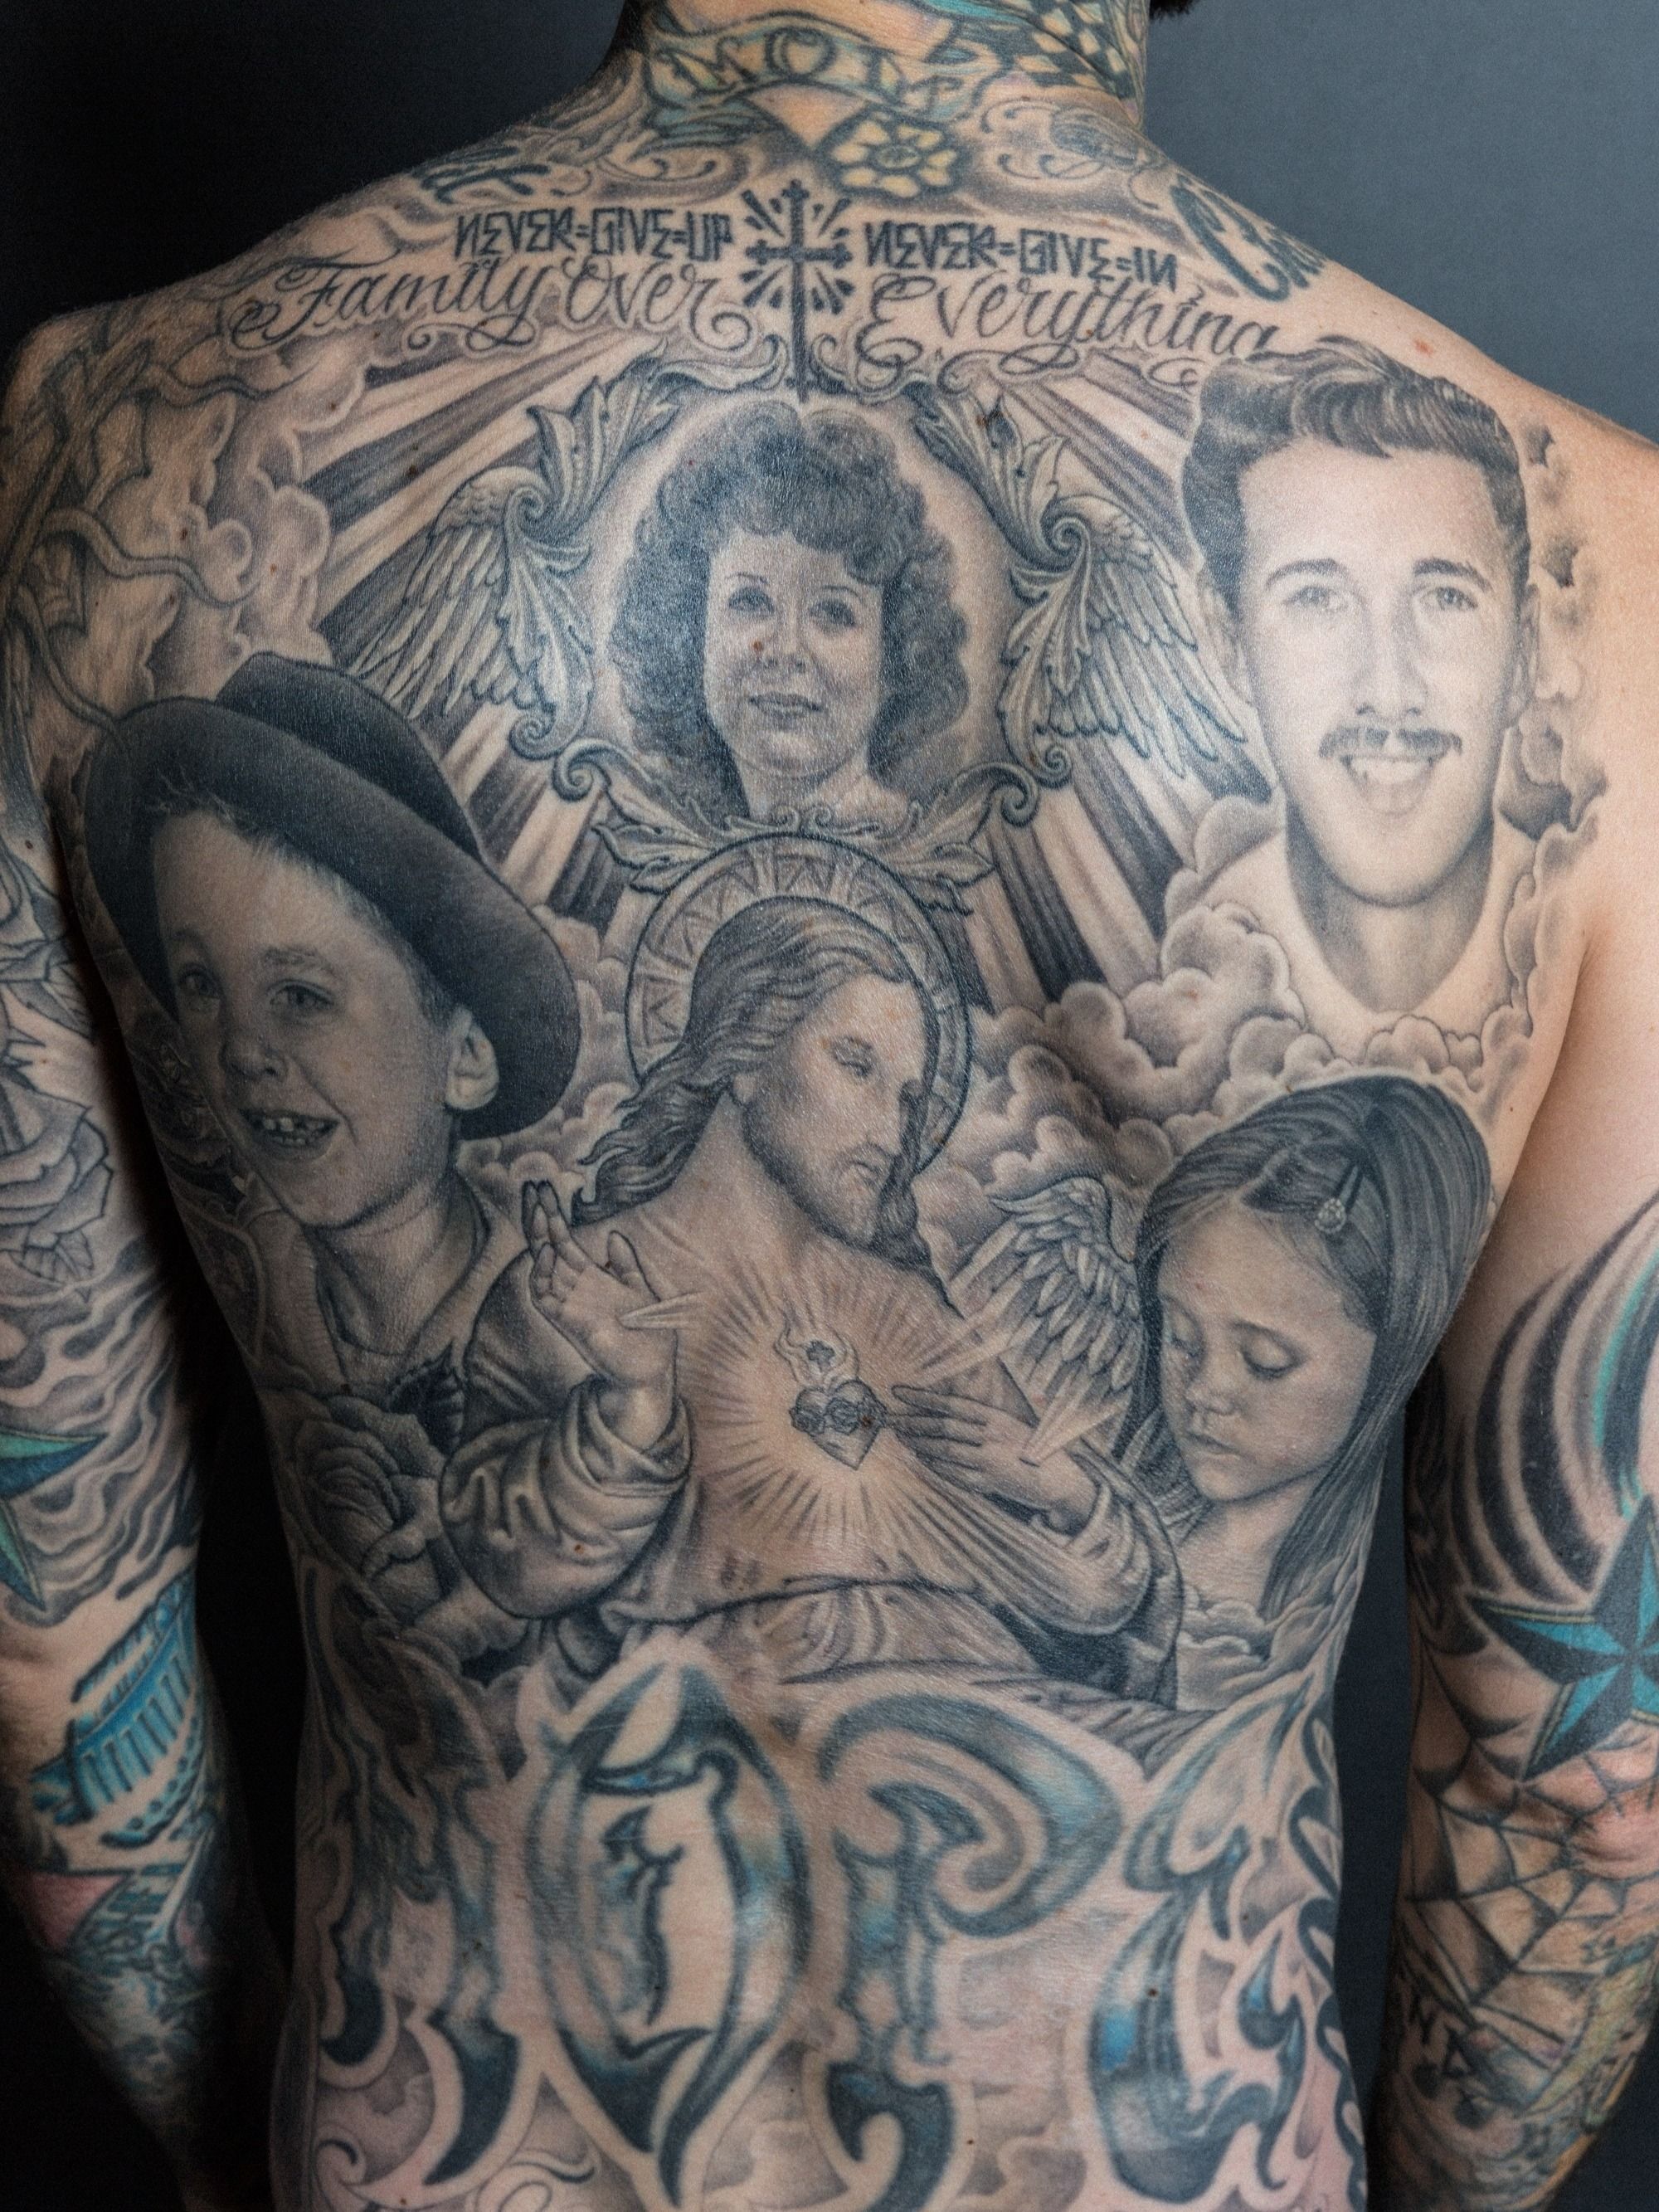 Amazoncom  Rock Star Temporary Tattoos Party Favor Set 50 Rocker Tattoos   Beauty  Personal Care